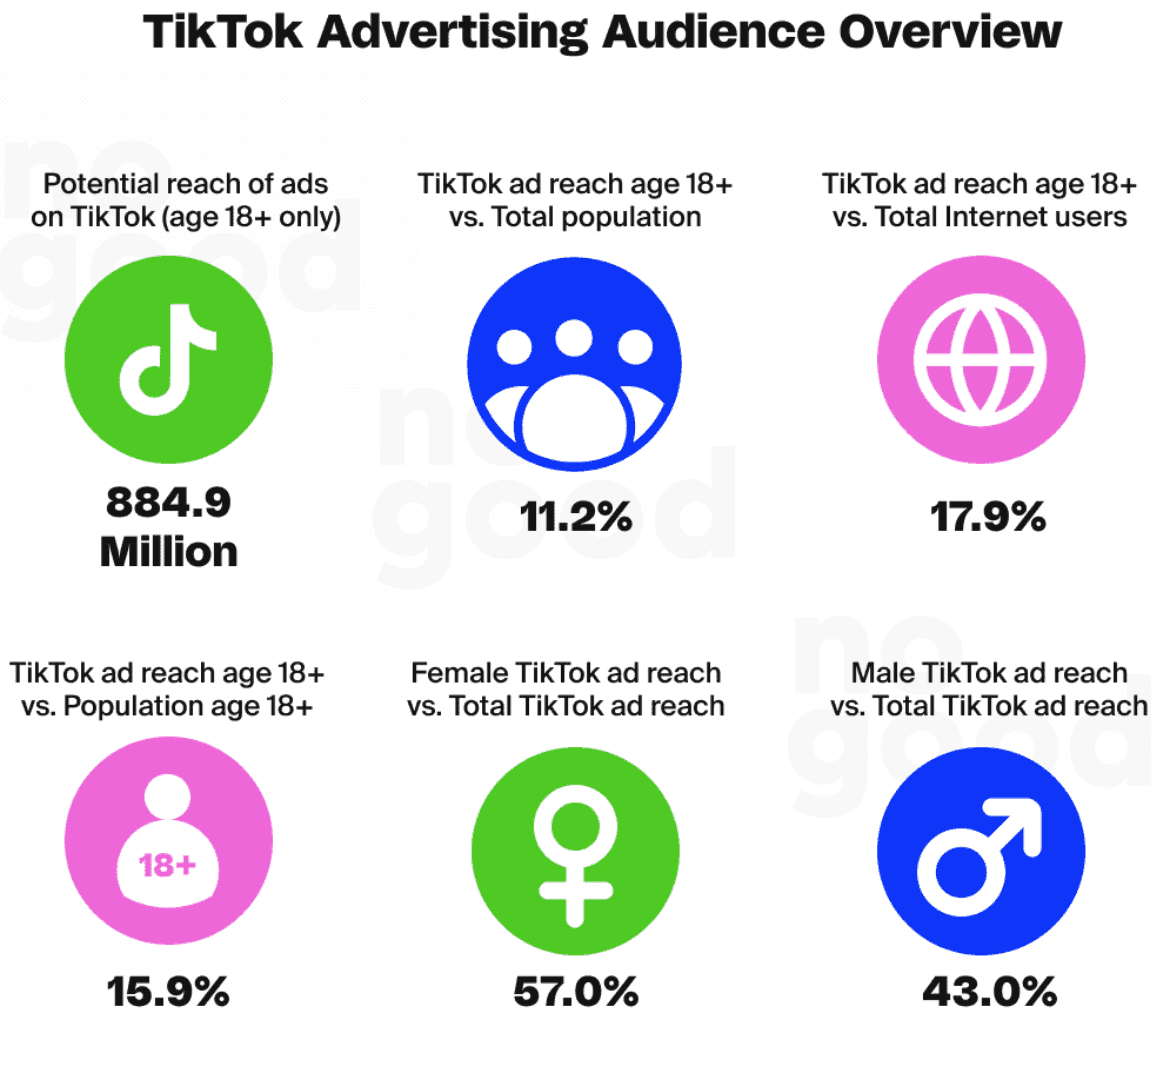 TikTok advertising audience overview statistics